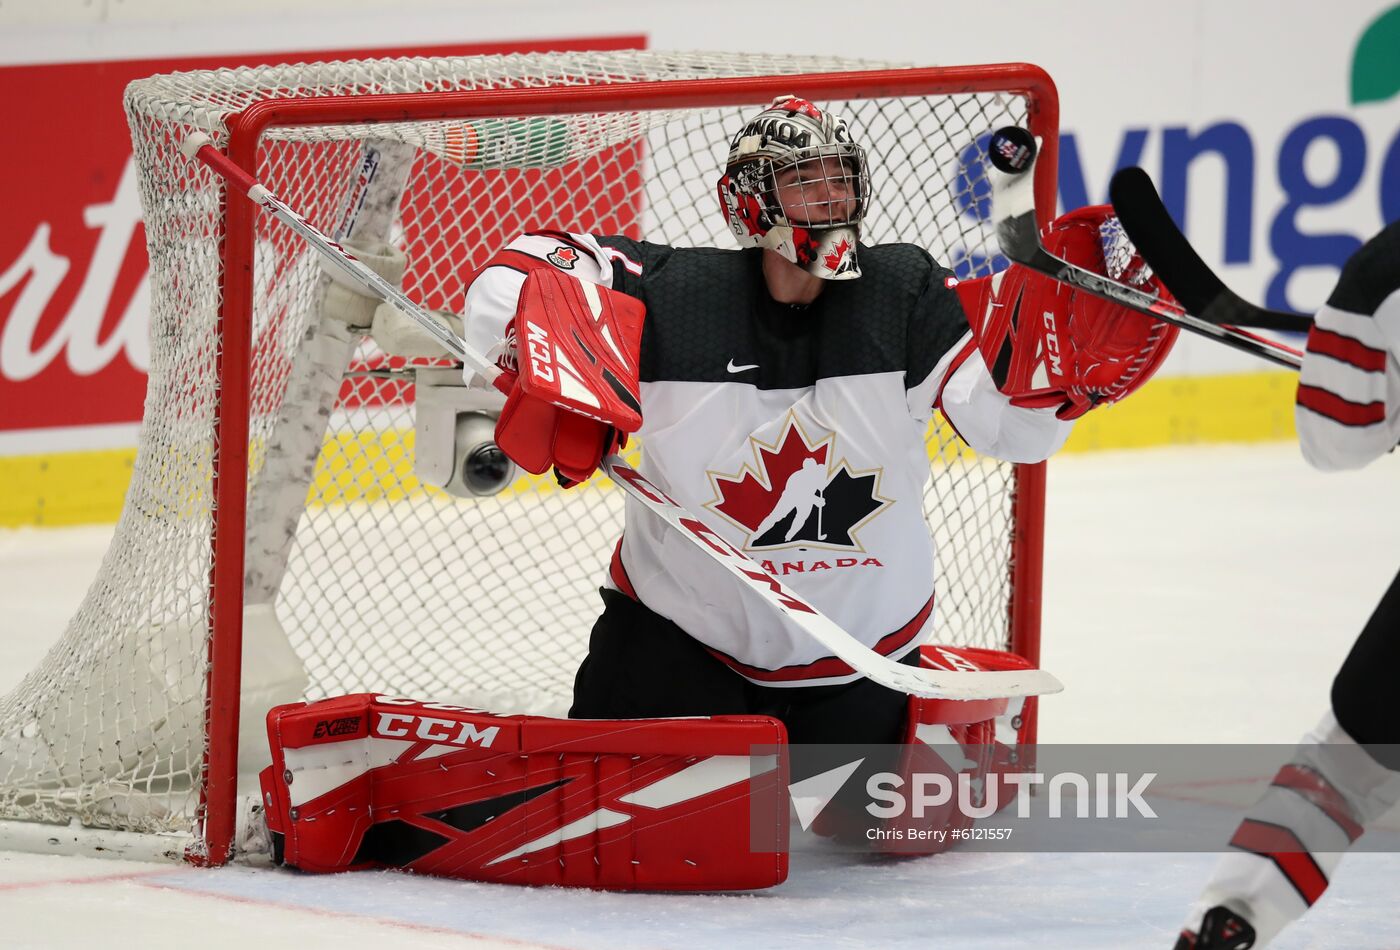 Czech Republic Ice Hockey Junior Worlds Russia - Canada